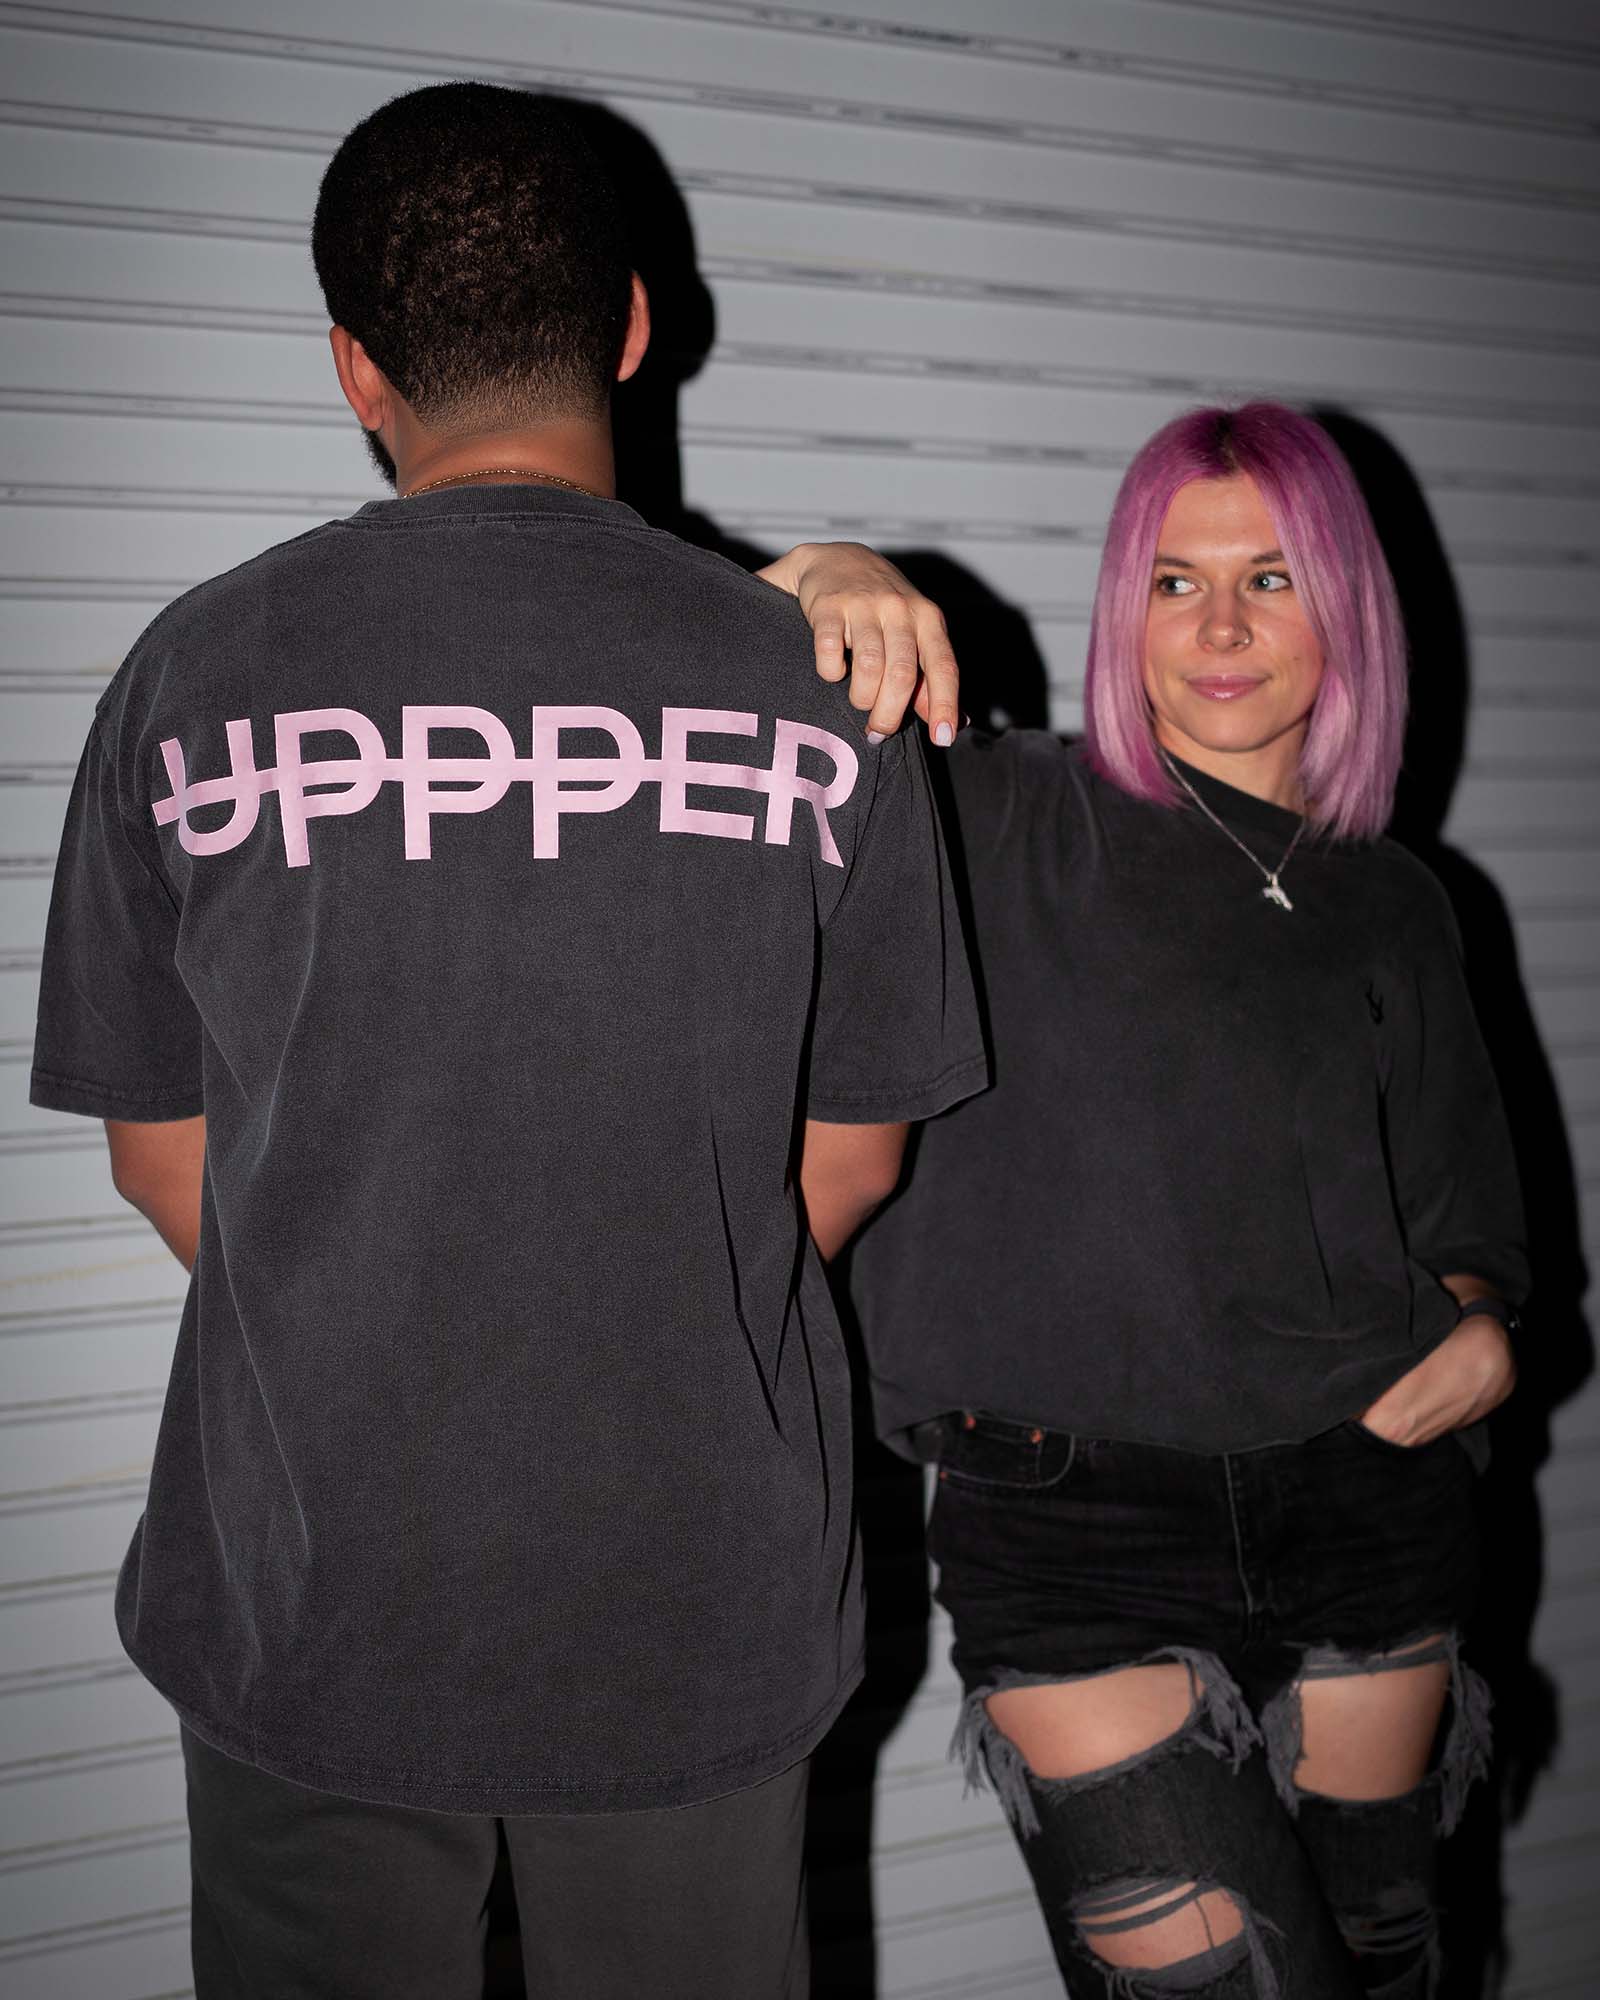 John and Iulia wearing uppper core t-shirts in washed black w/ pink logo